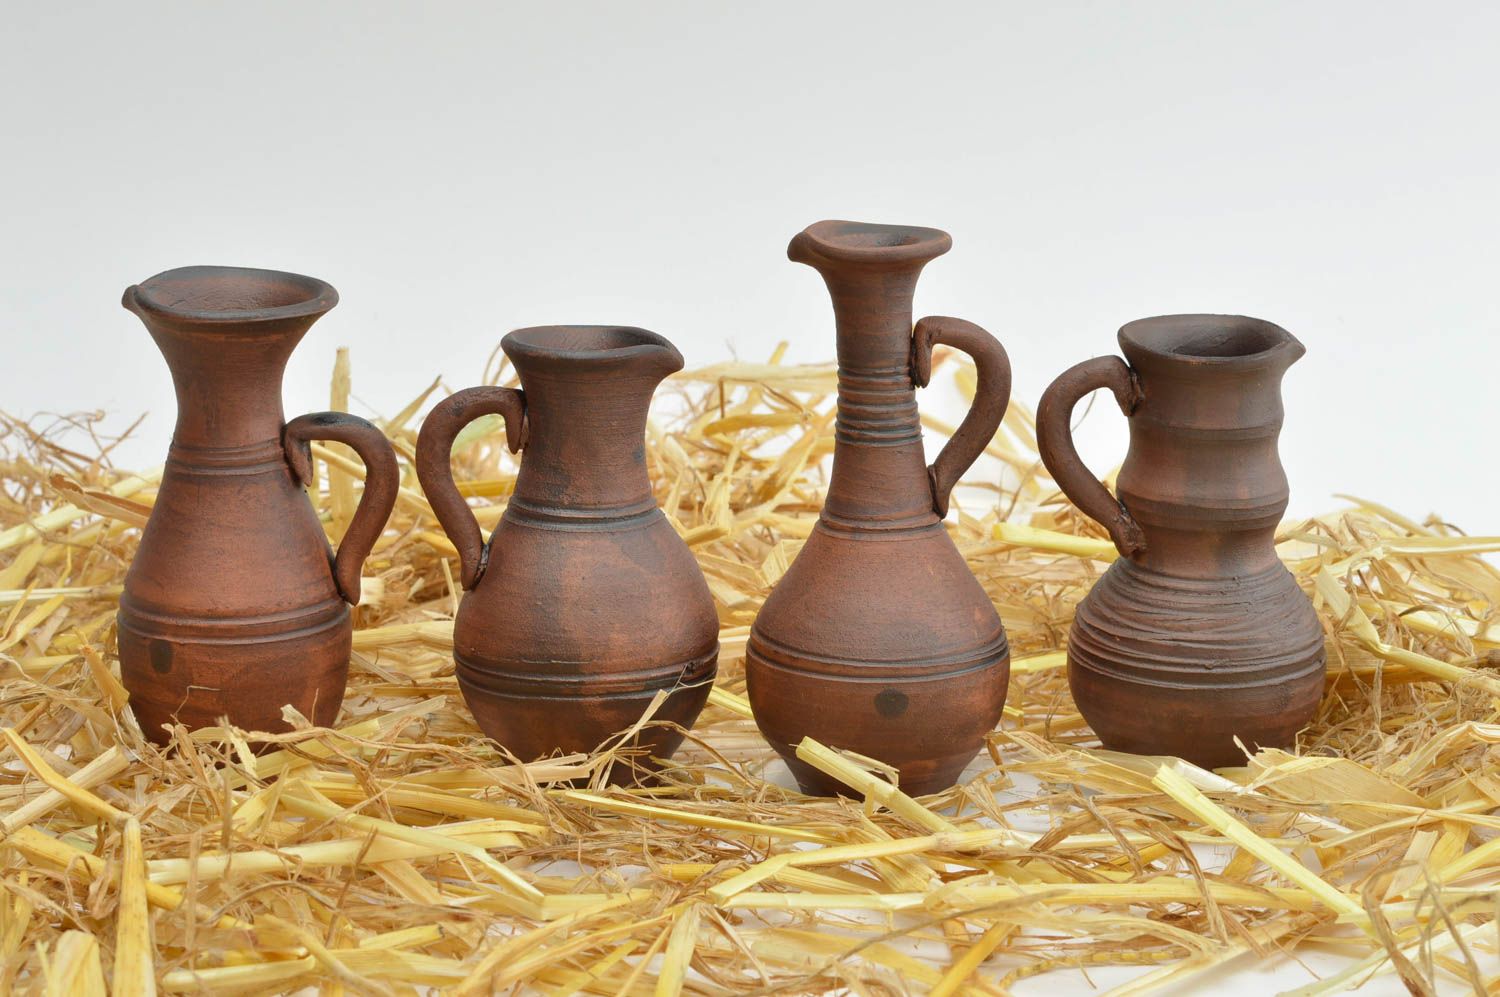 Set of 4 decorative small ceramic pitchers for home décor 0,8 lb photo 1